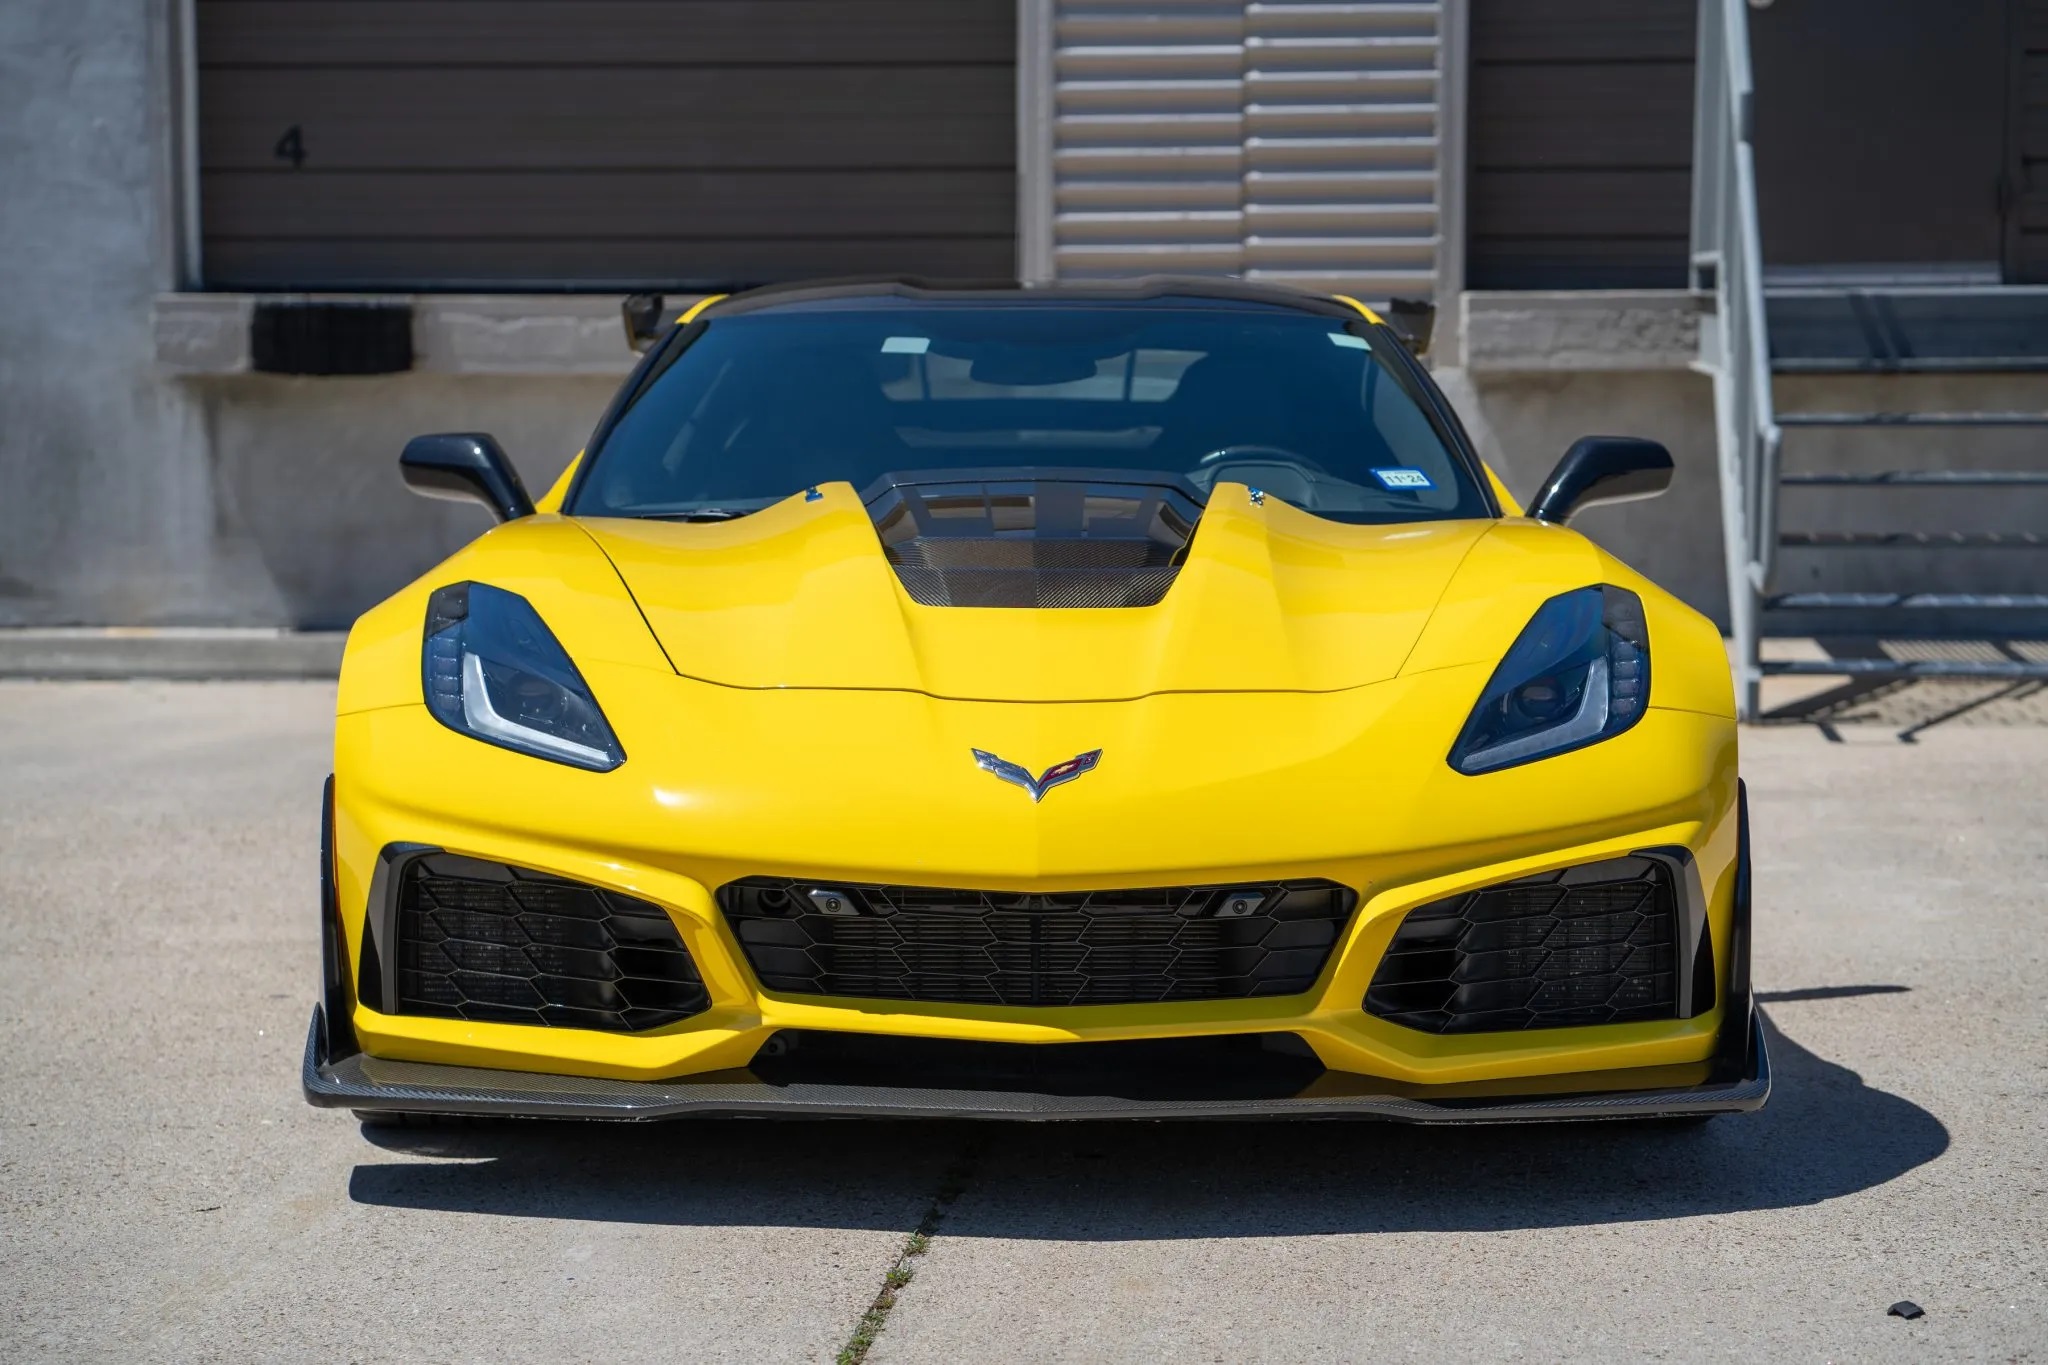 FOR SALE: 2019 Chevrolet Corvette ZR1 Coupe